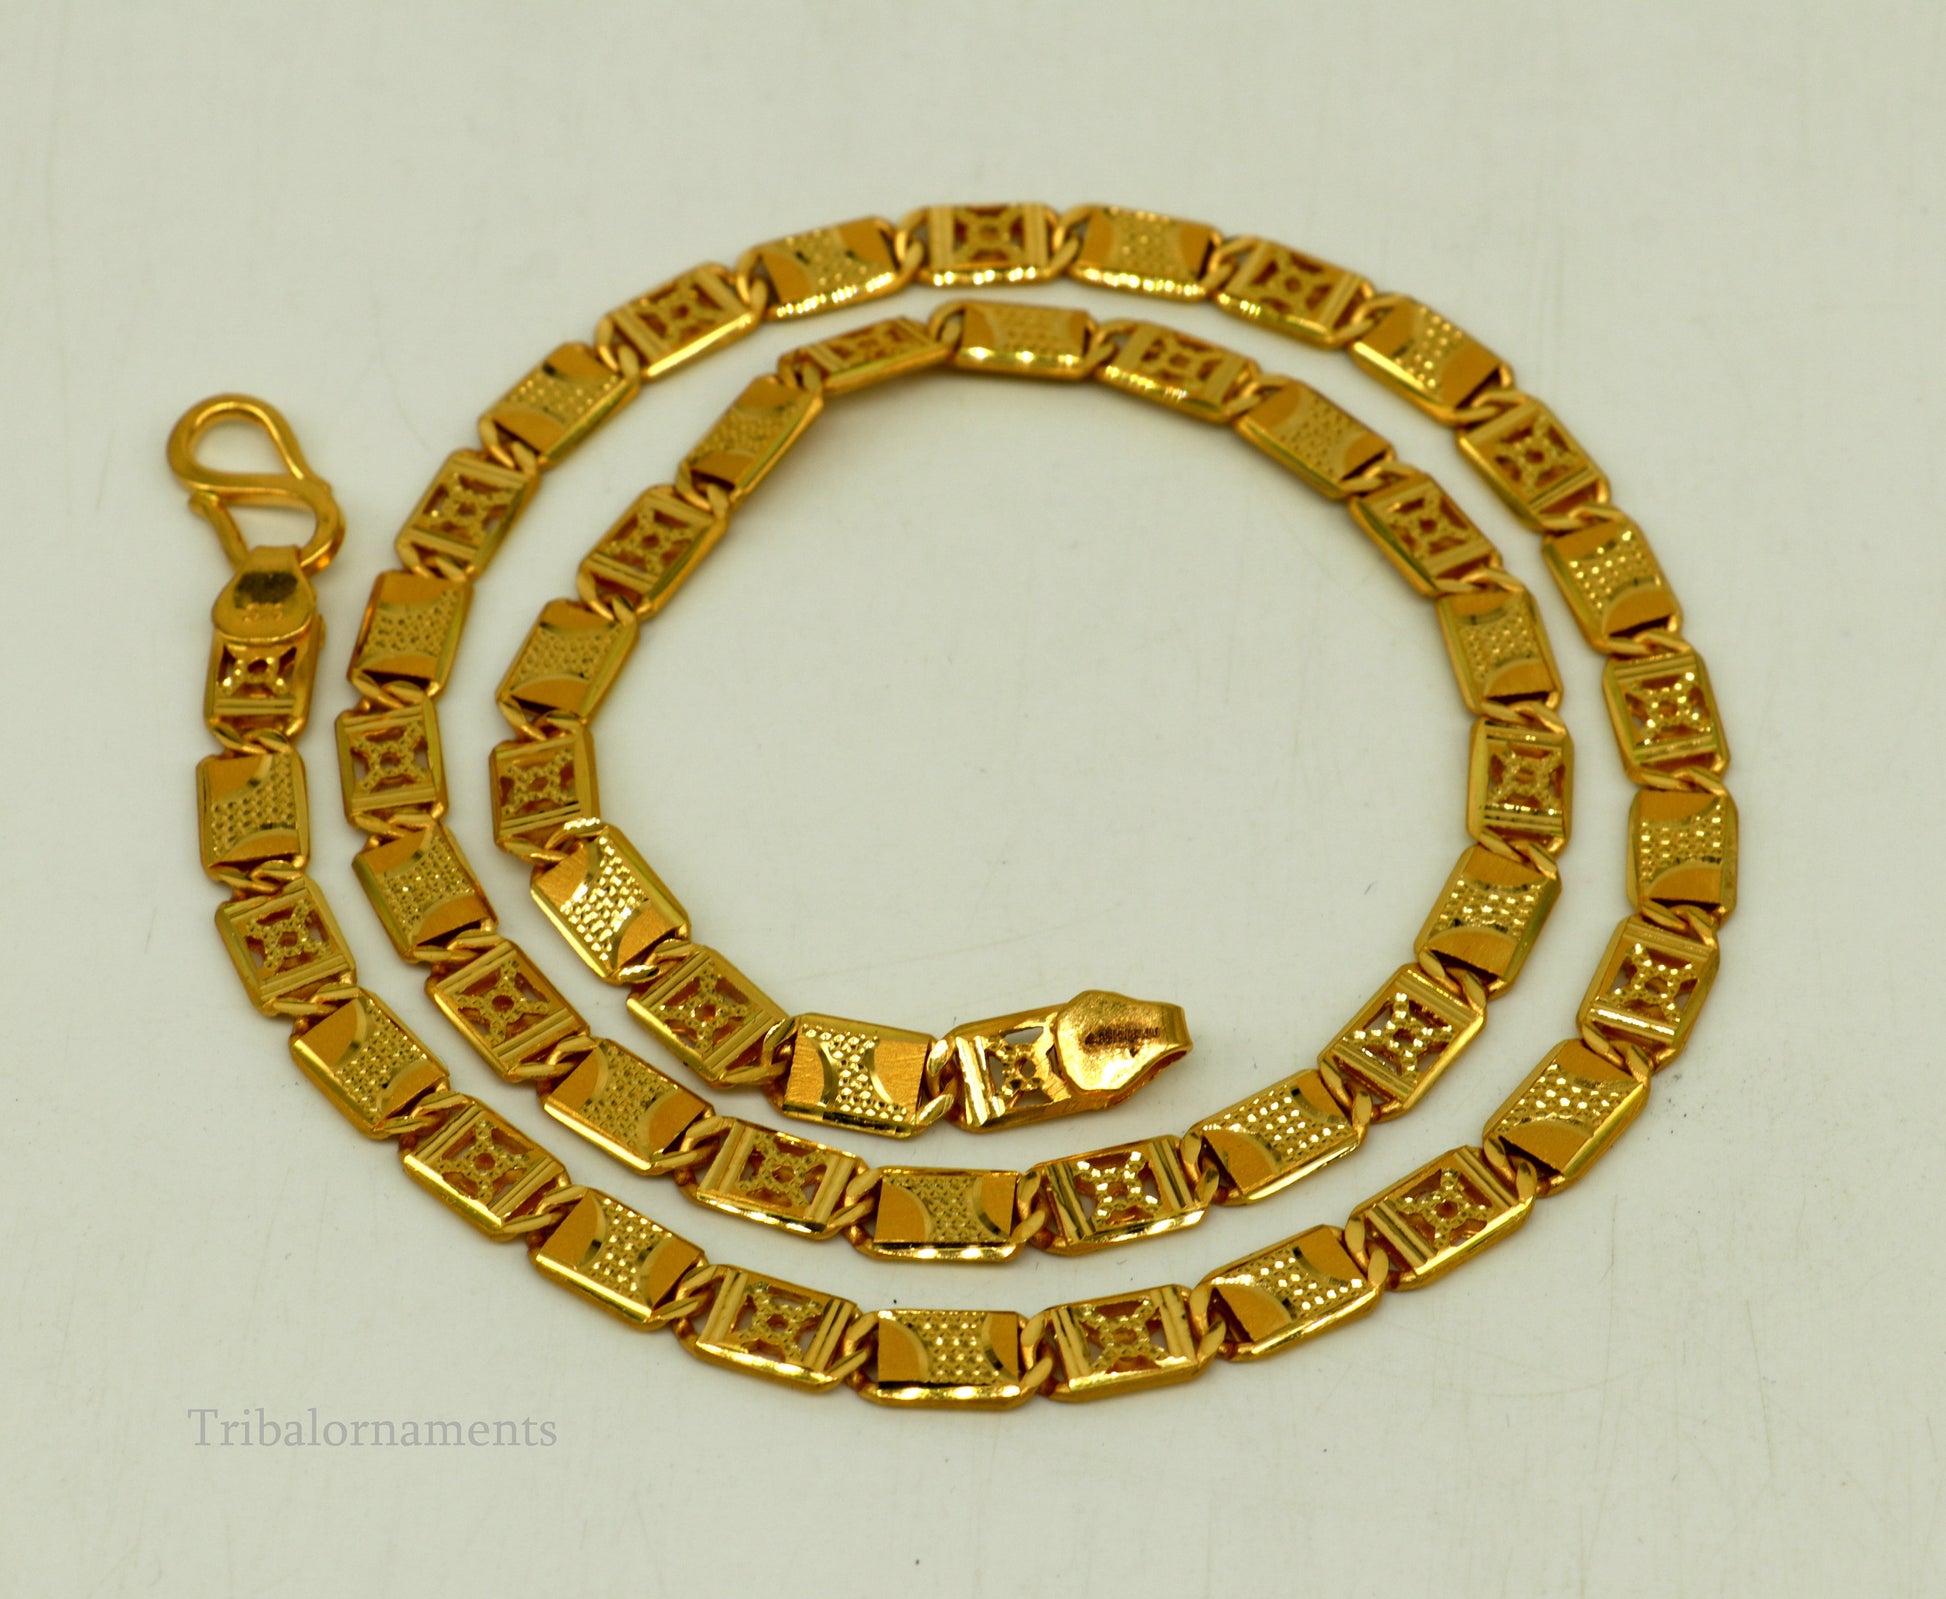 Vintage design Handmade Genuine 22 karat yellow gold gorgeous navabi chain stylish chain gifting royal jewelry from india ch259 - TRIBAL ORNAMENTS